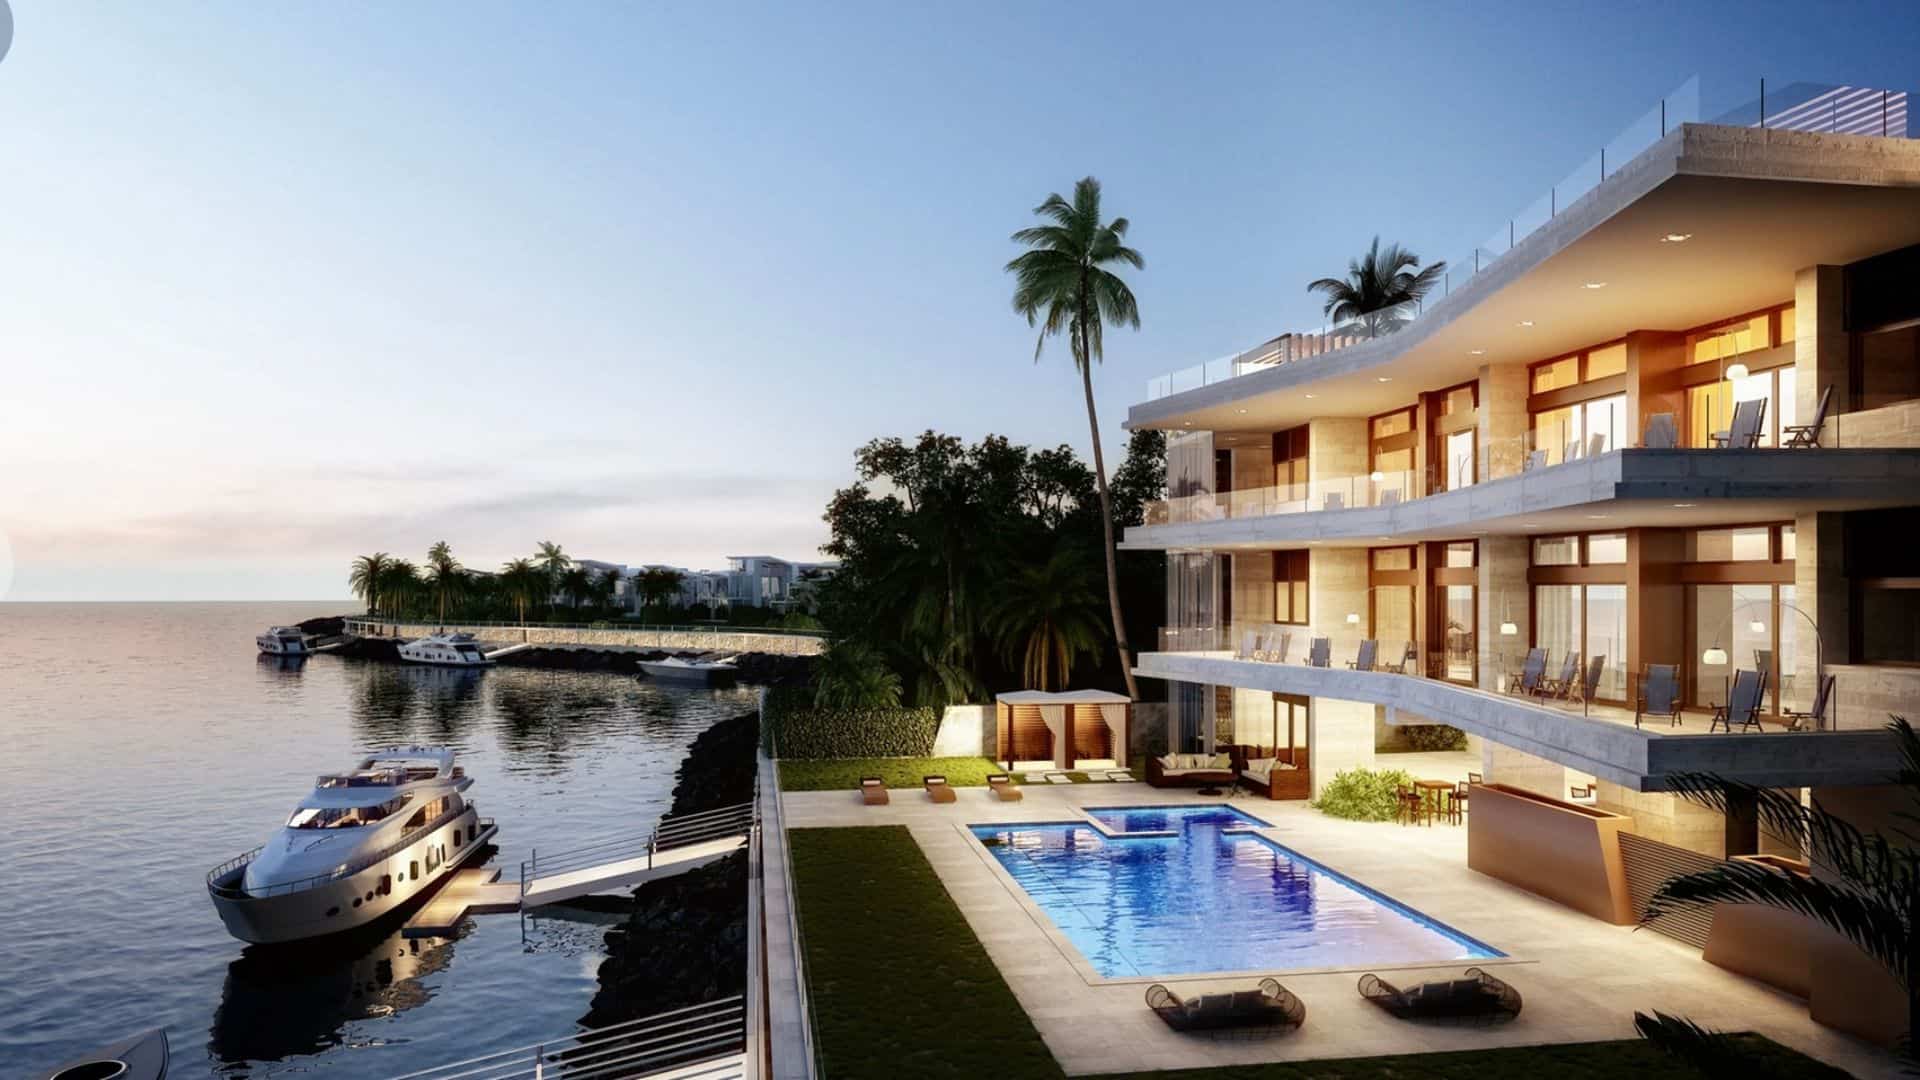 ocean reef panama real estate investment options